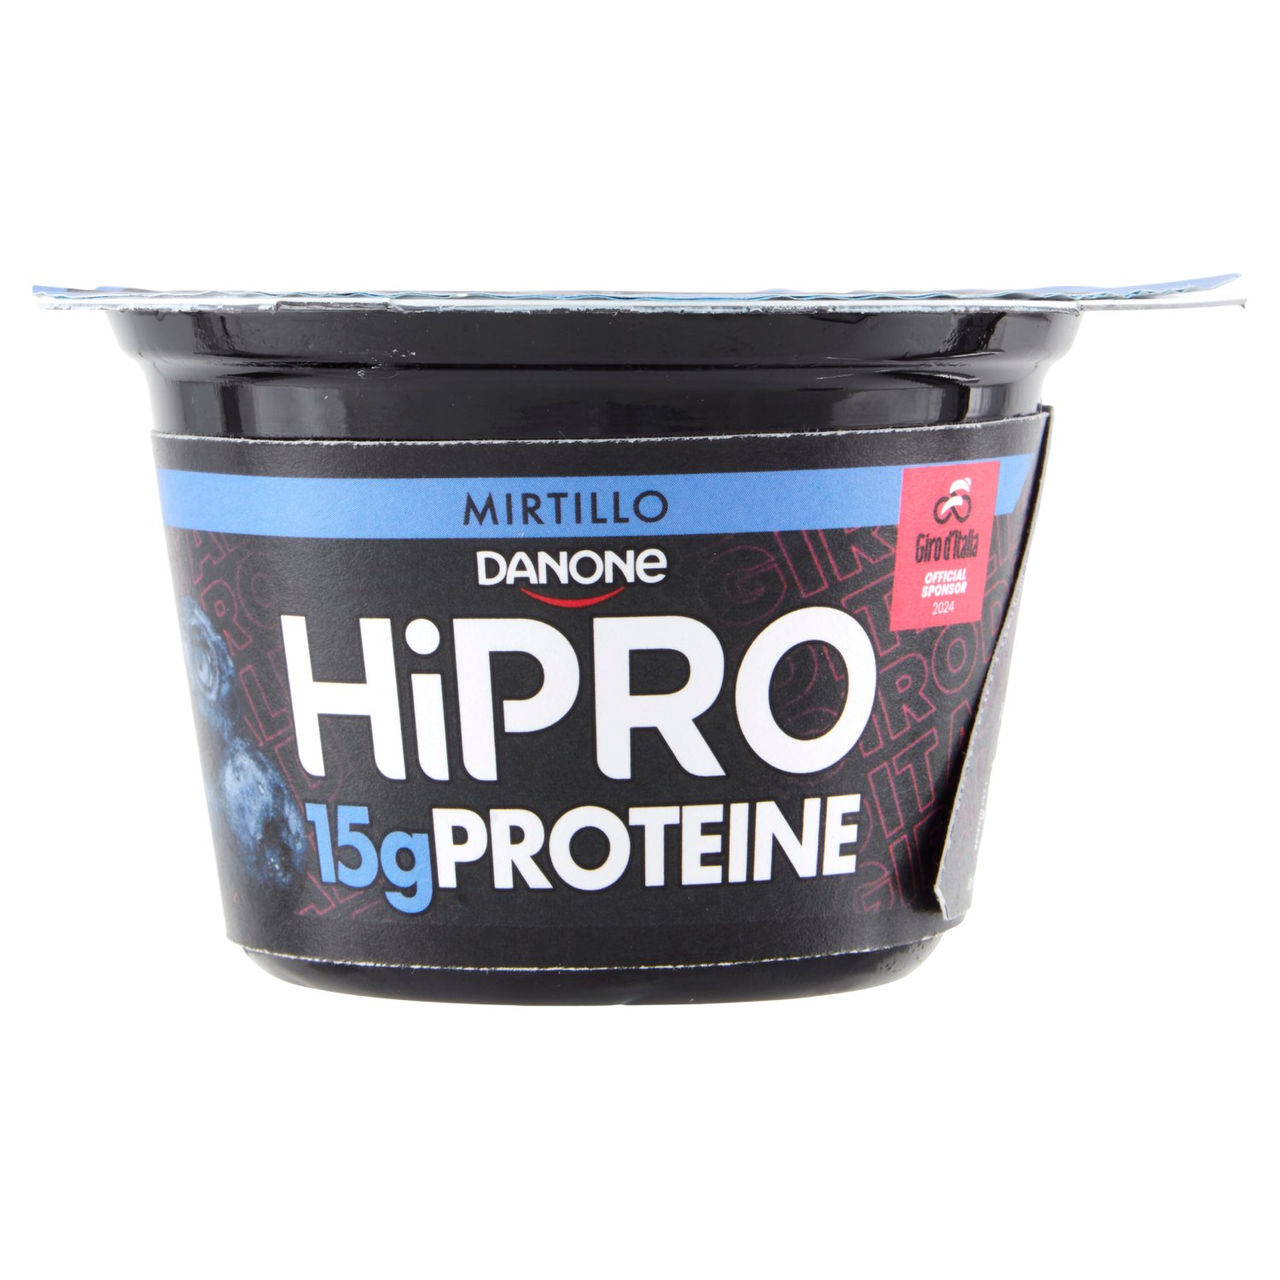 HiPRO Spoon 15g Proteine Mirtillo 160 g